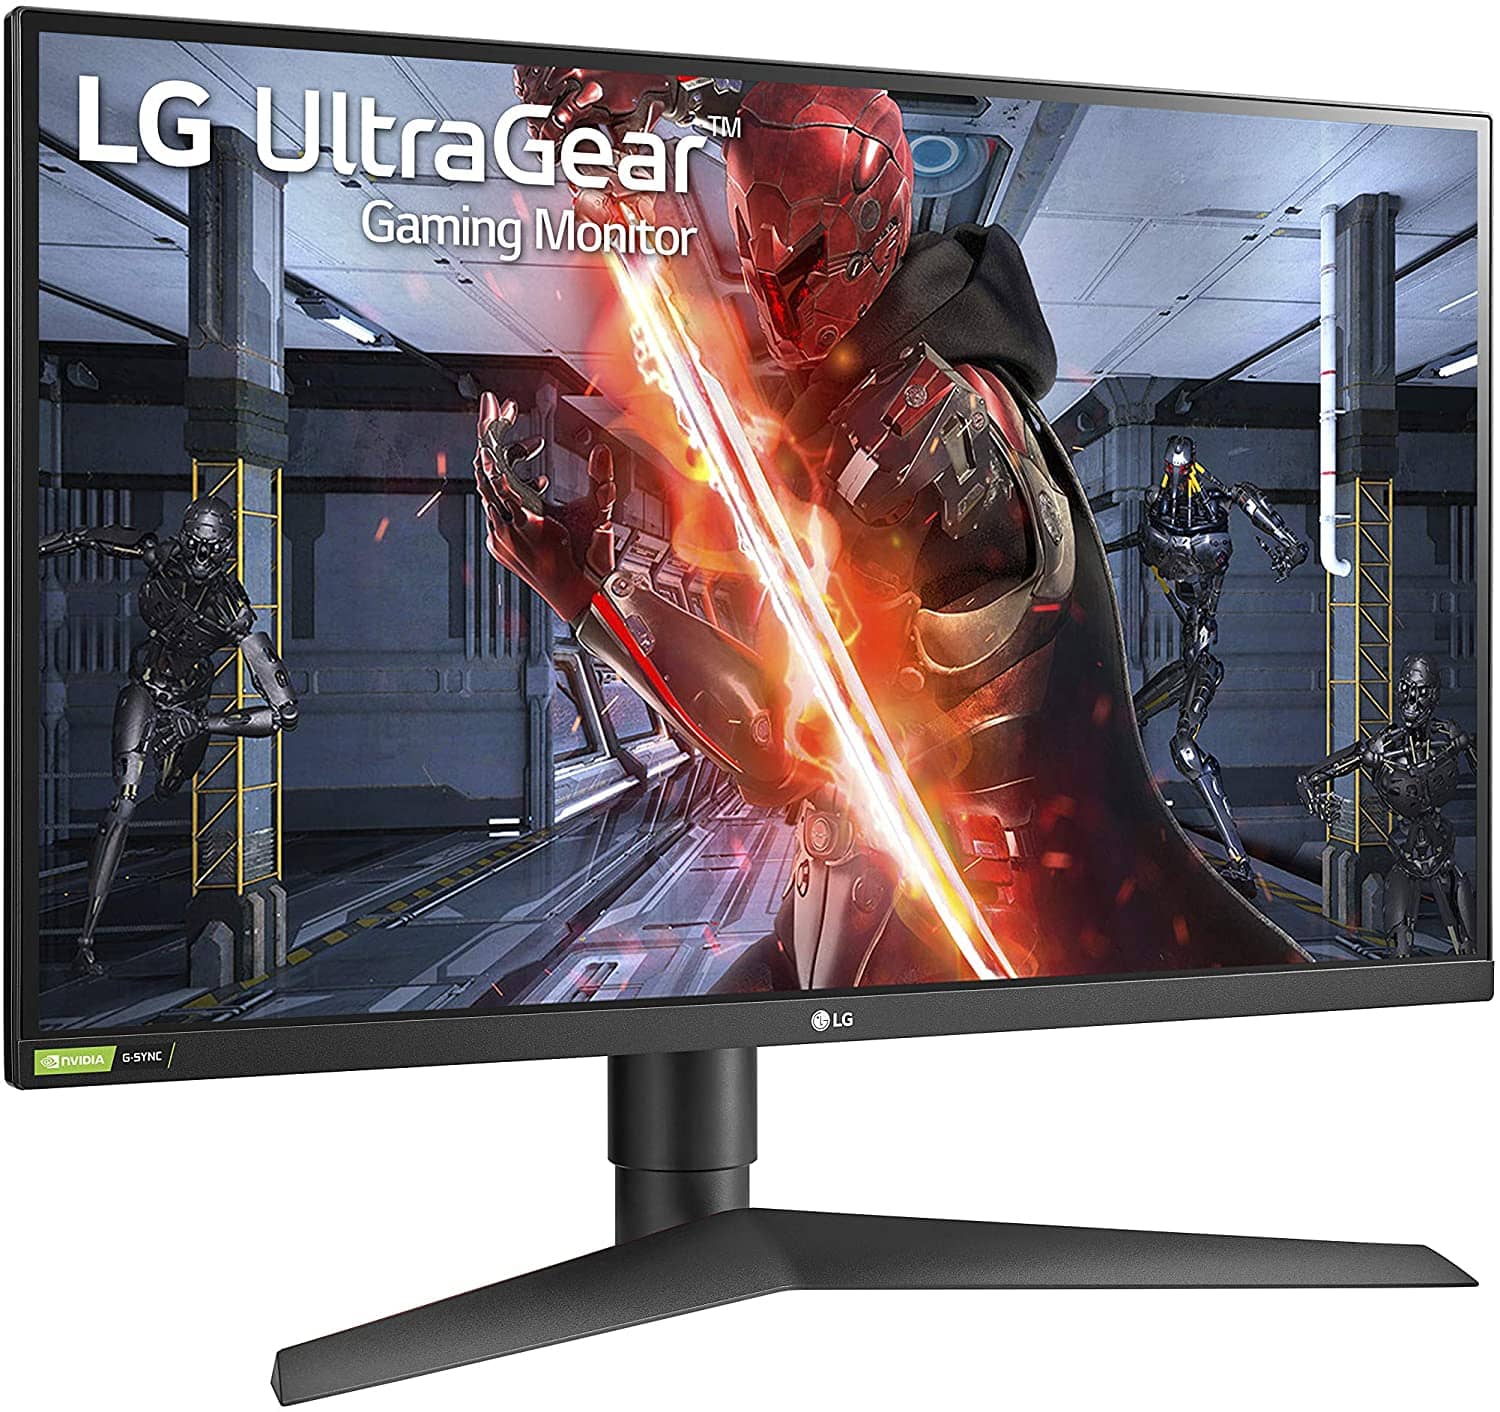 LG Ultra Gear Gaming Monitor